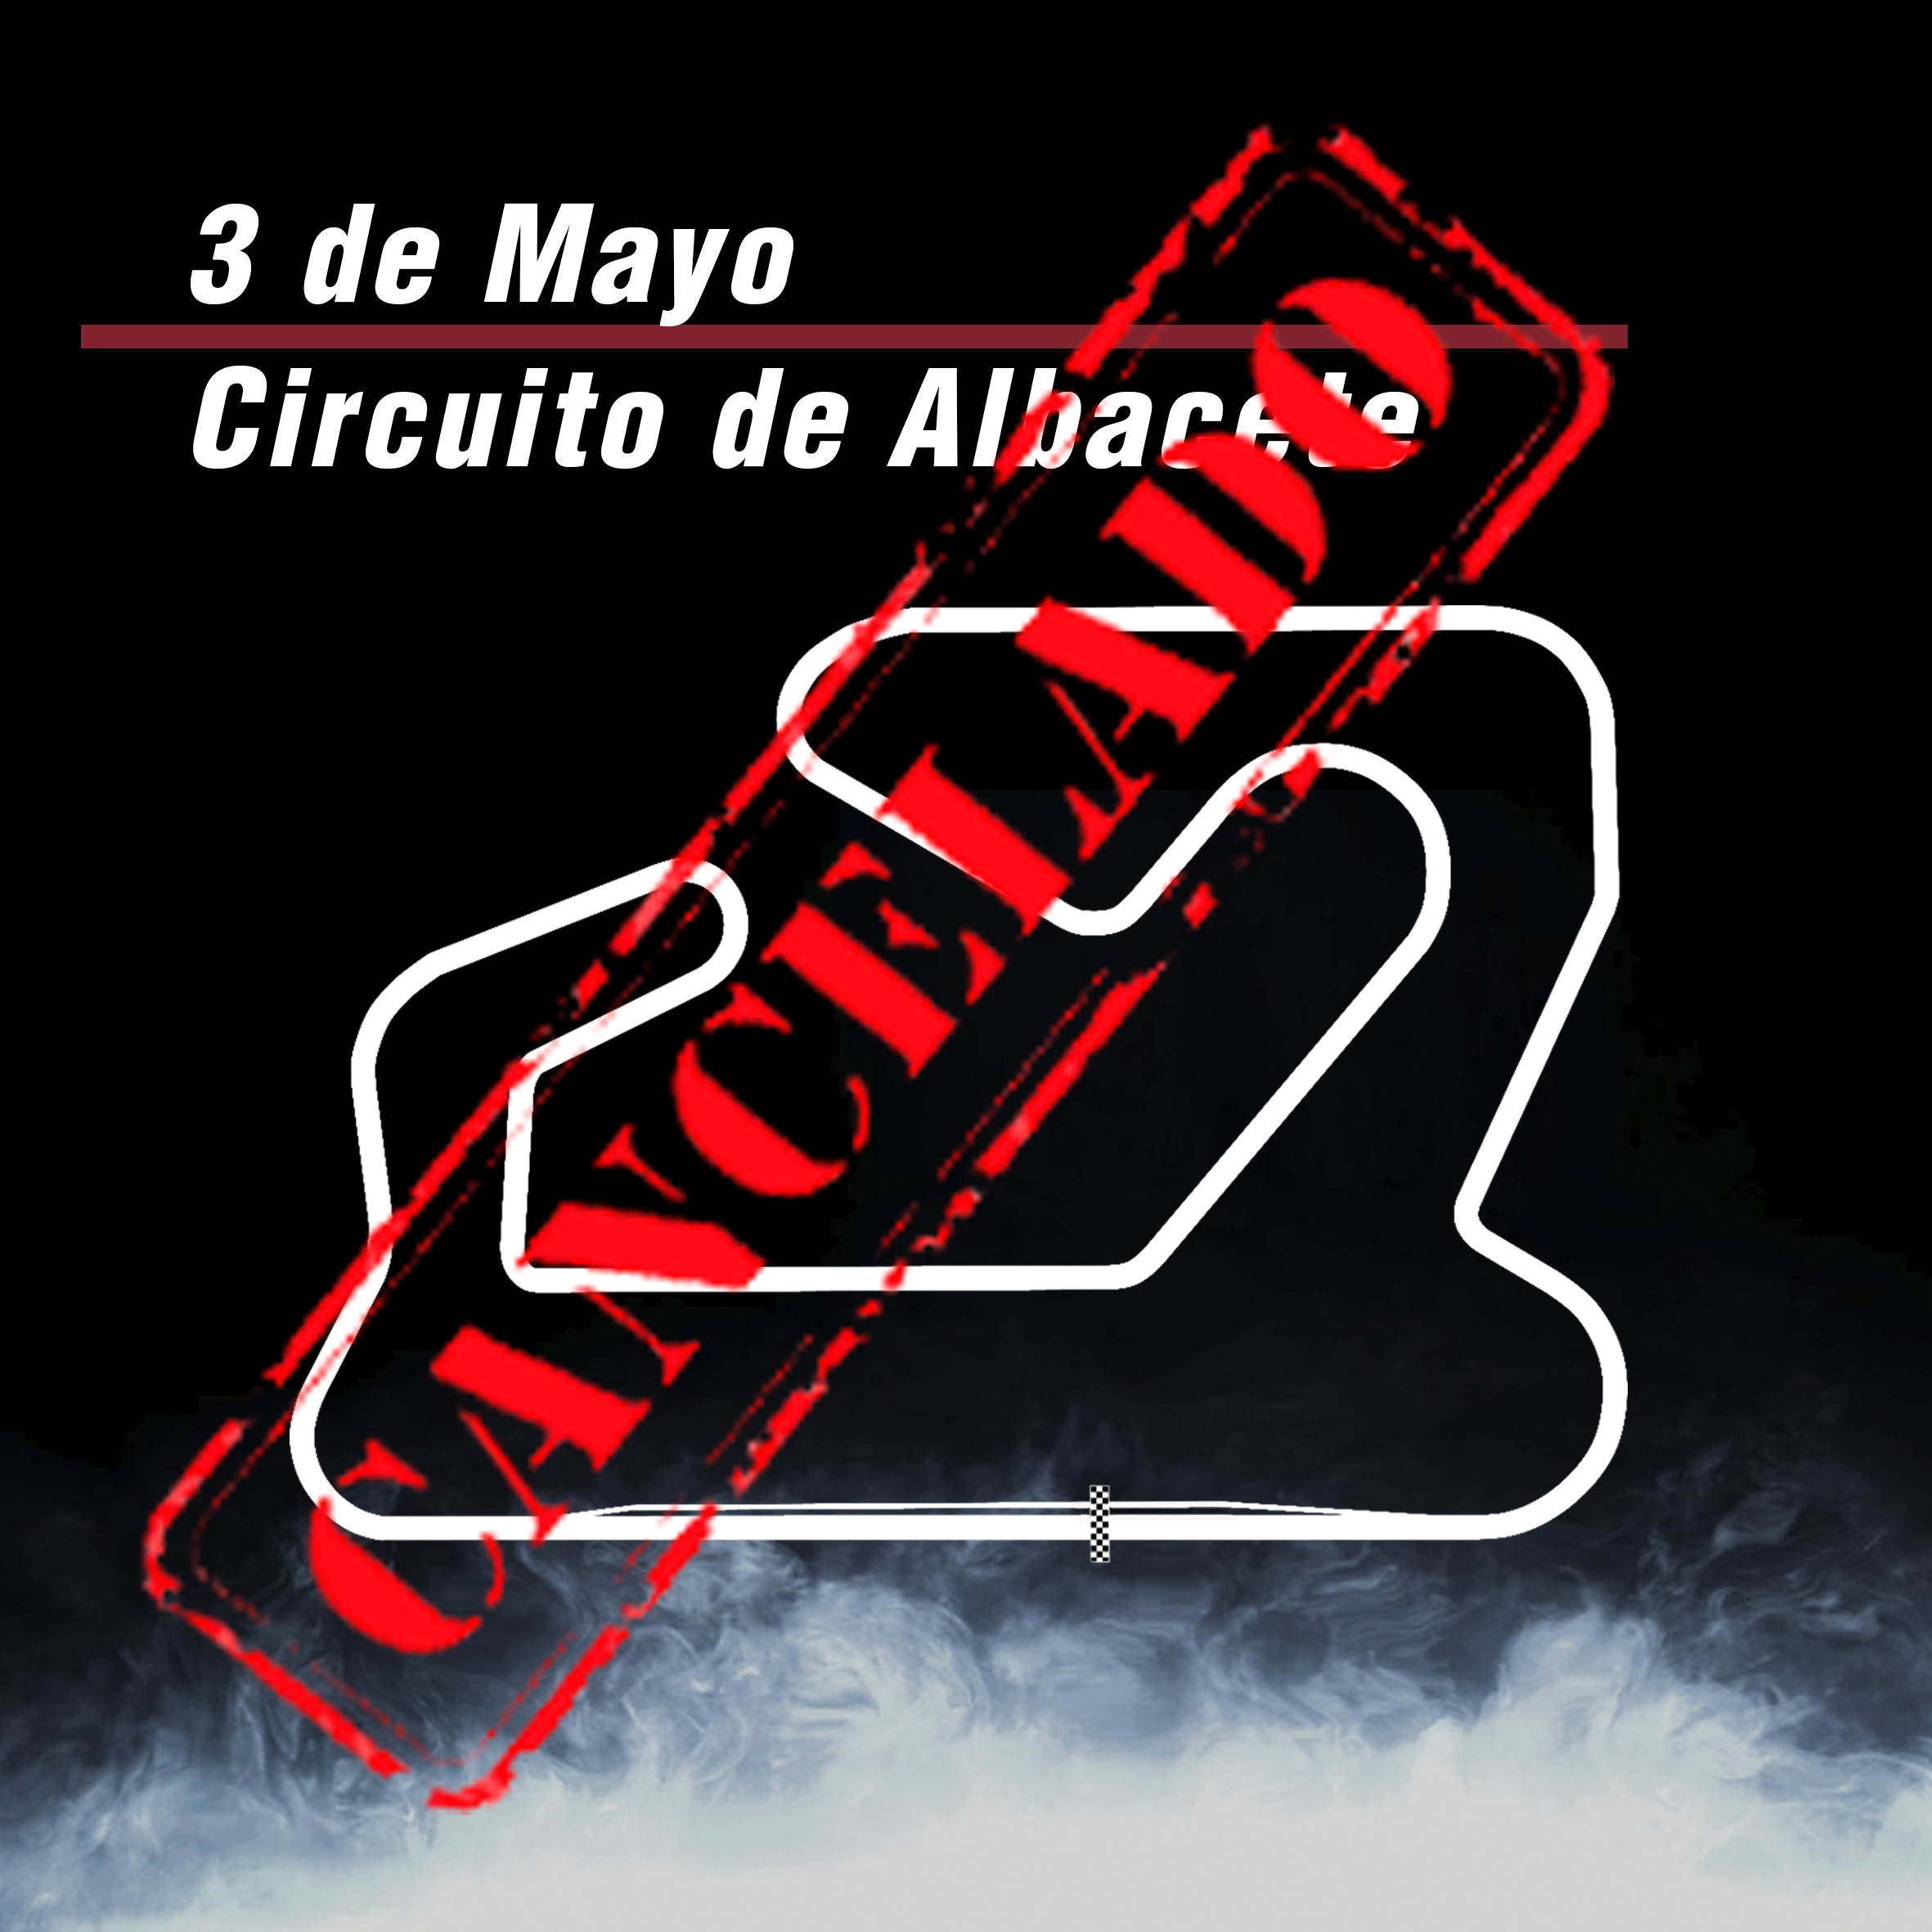  AlbaceteMayweb Cancelado